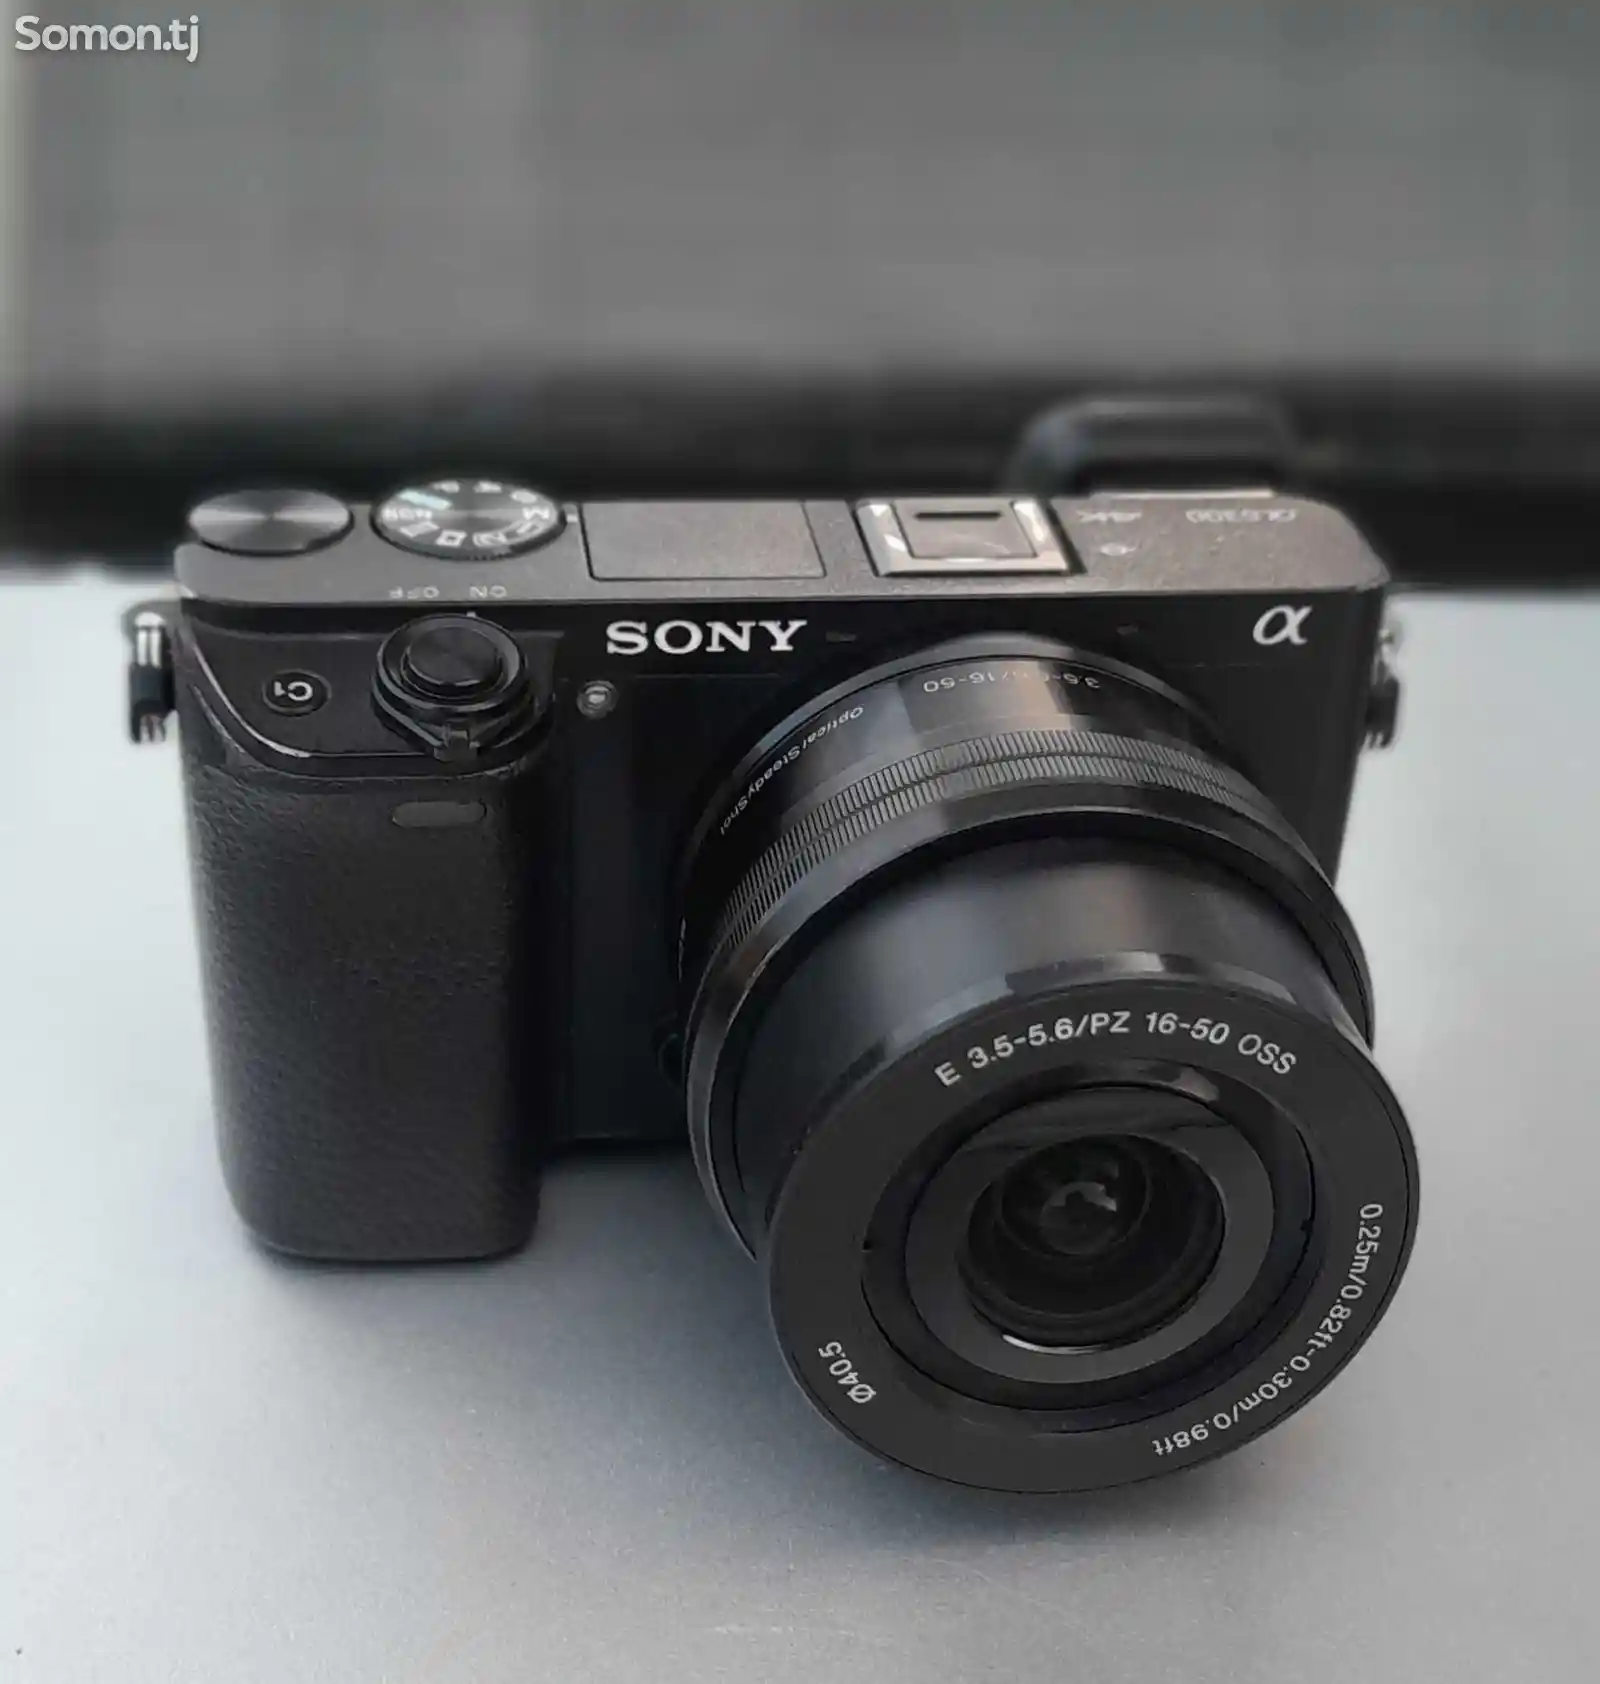 Аксессуары для фотокамеры Sony 63 00-5